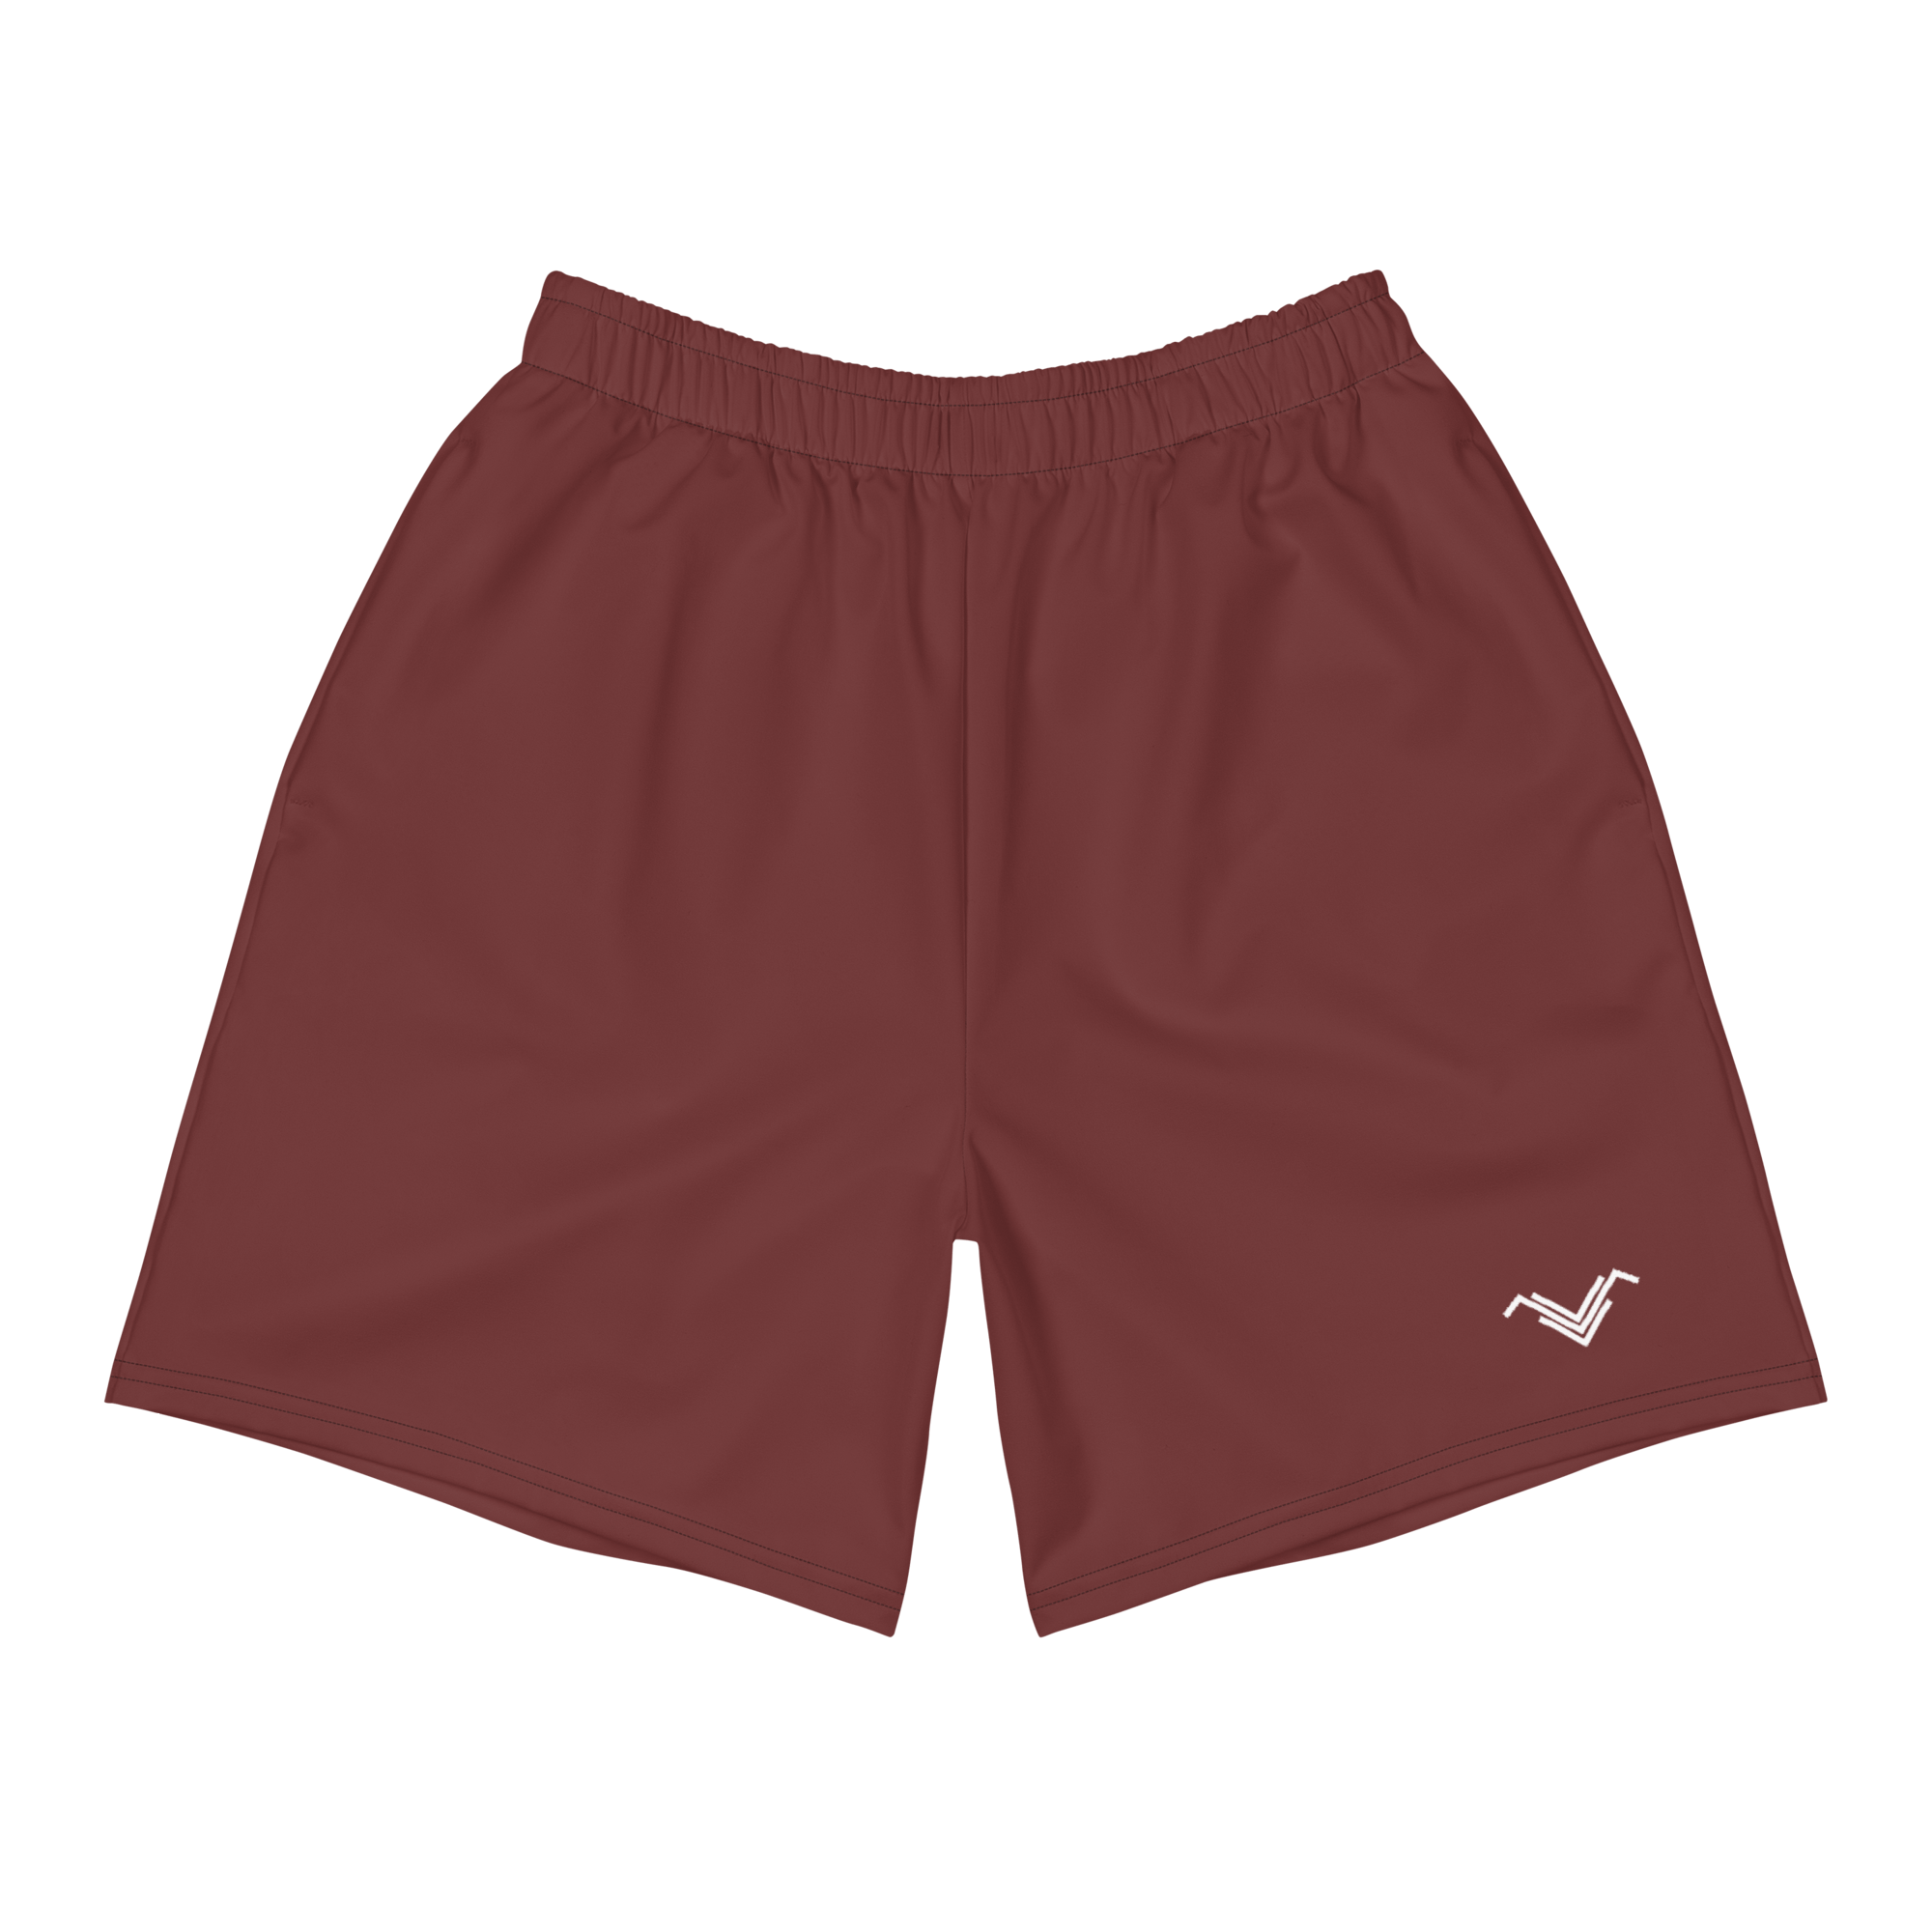 Recycled Athletic Shorts - Auburn - FormTheory Athletics